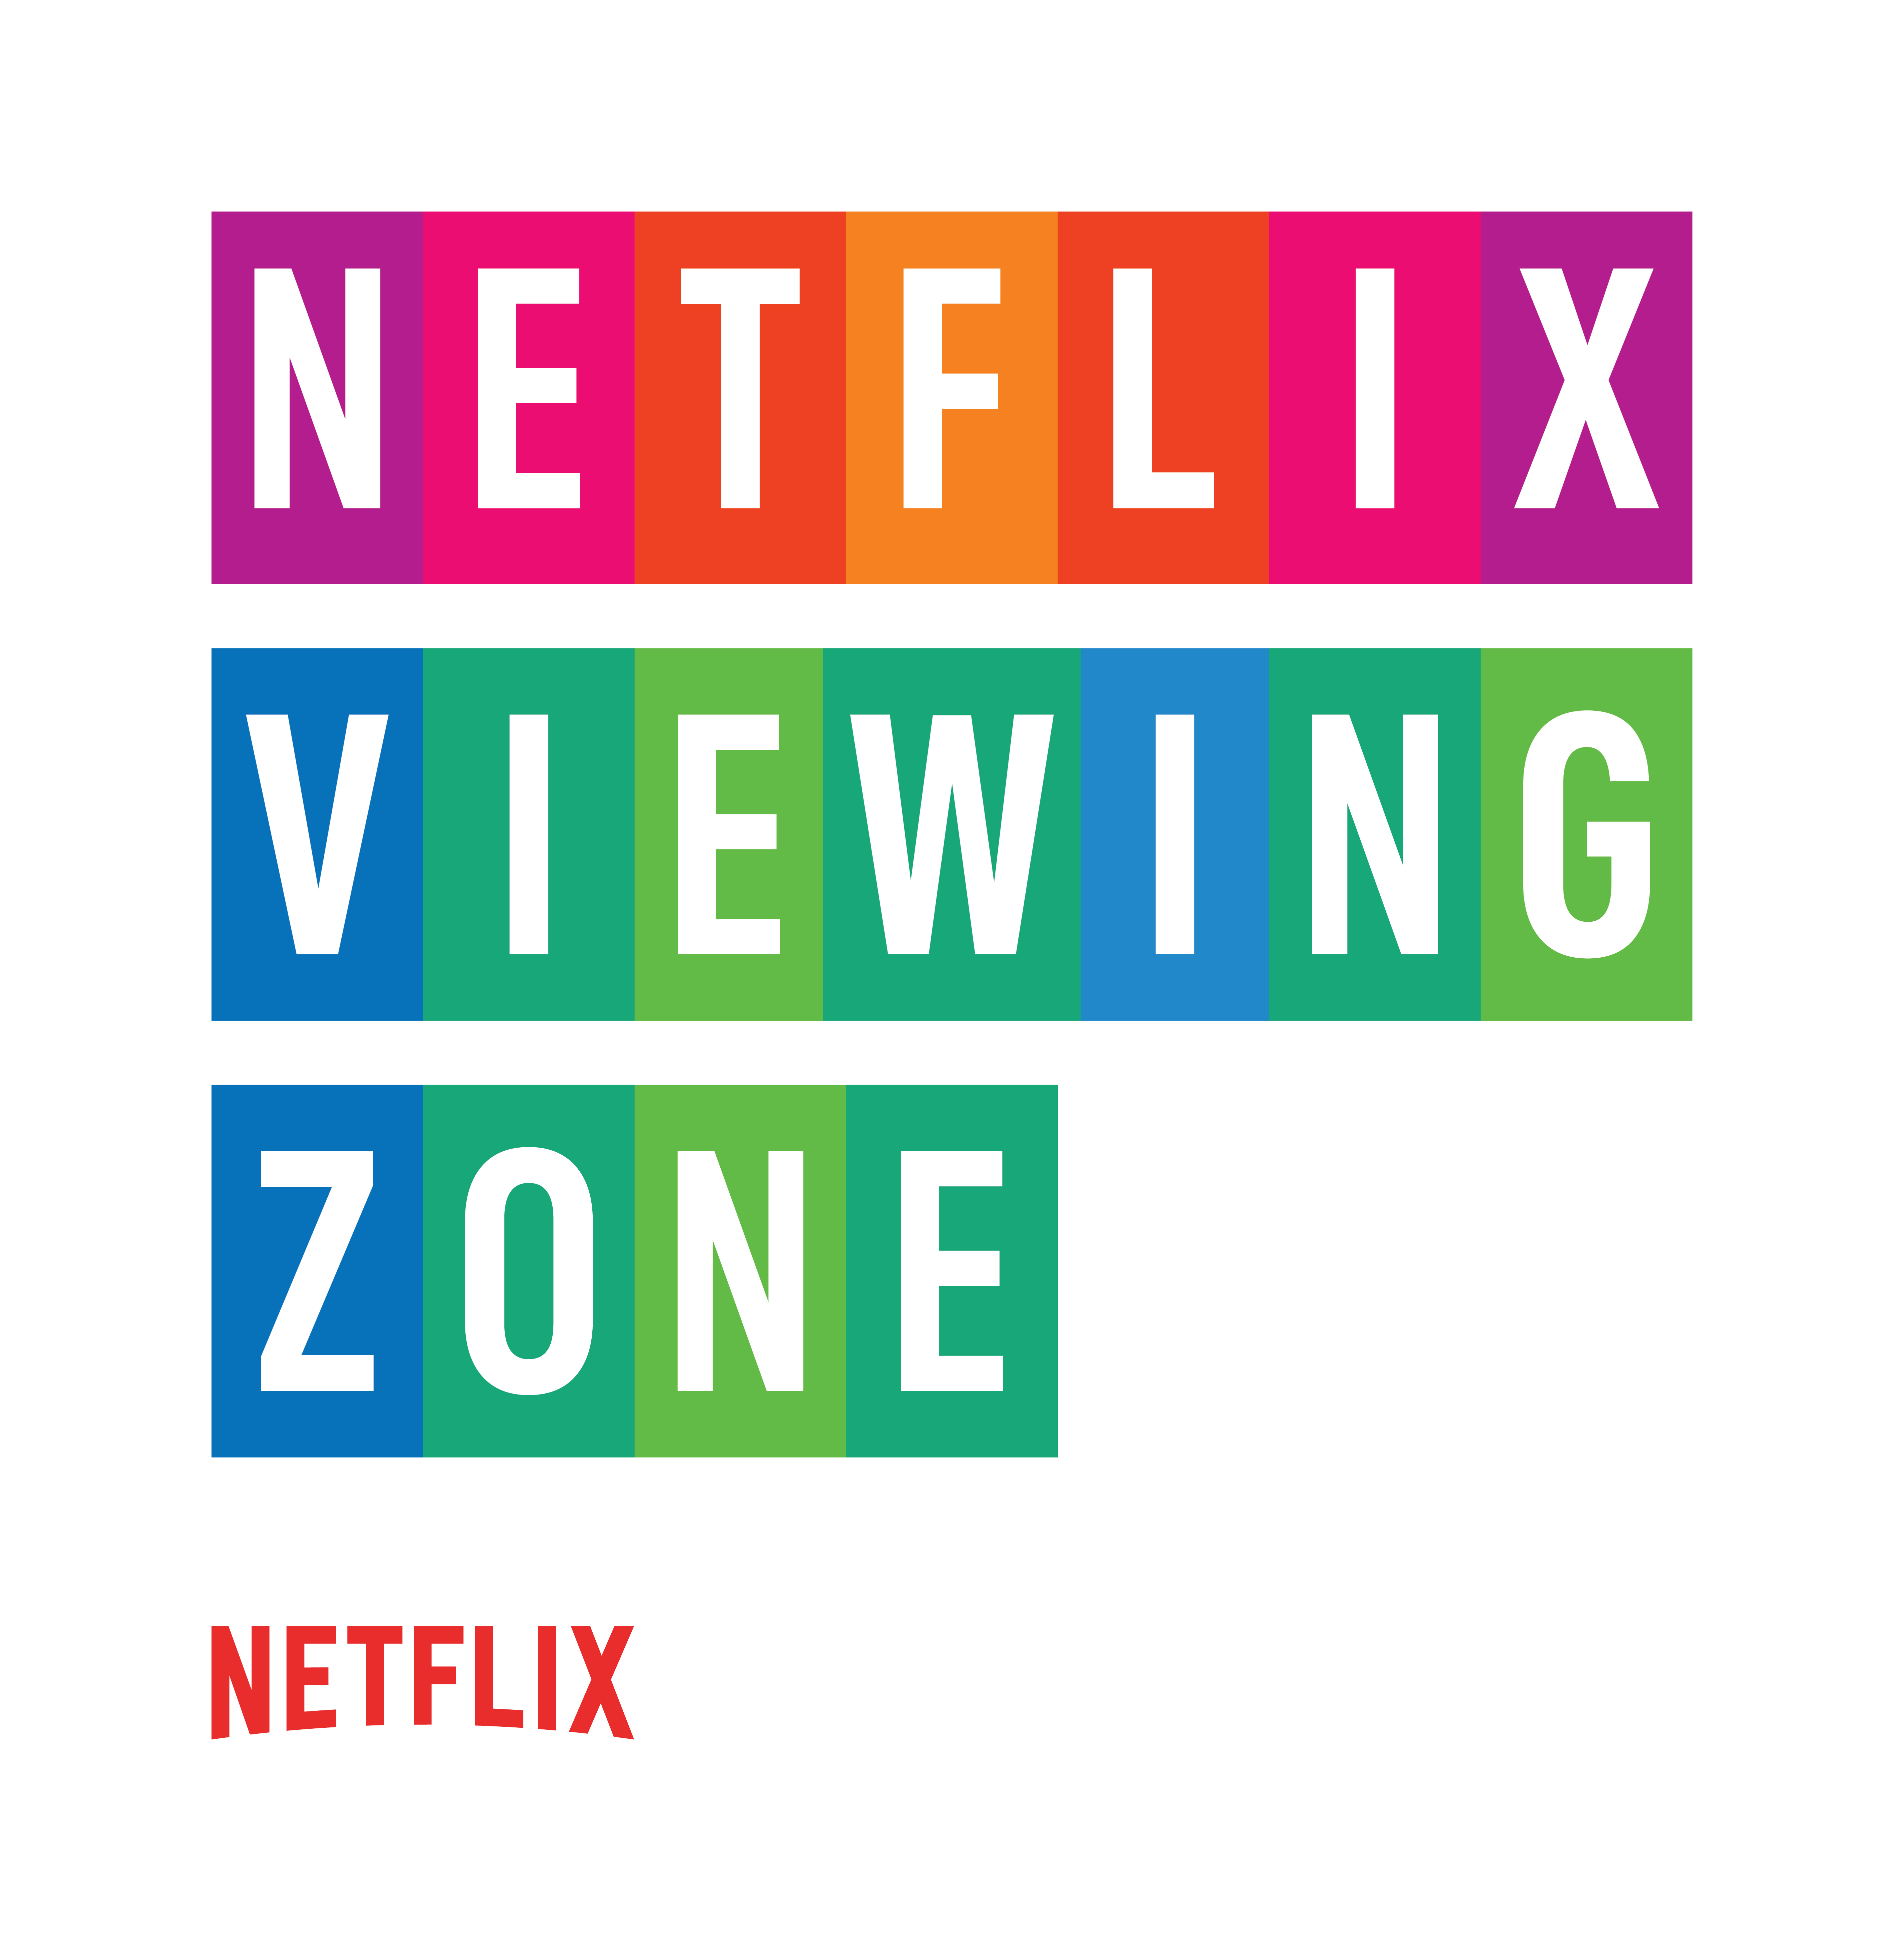 Netflix Viewing Zone 